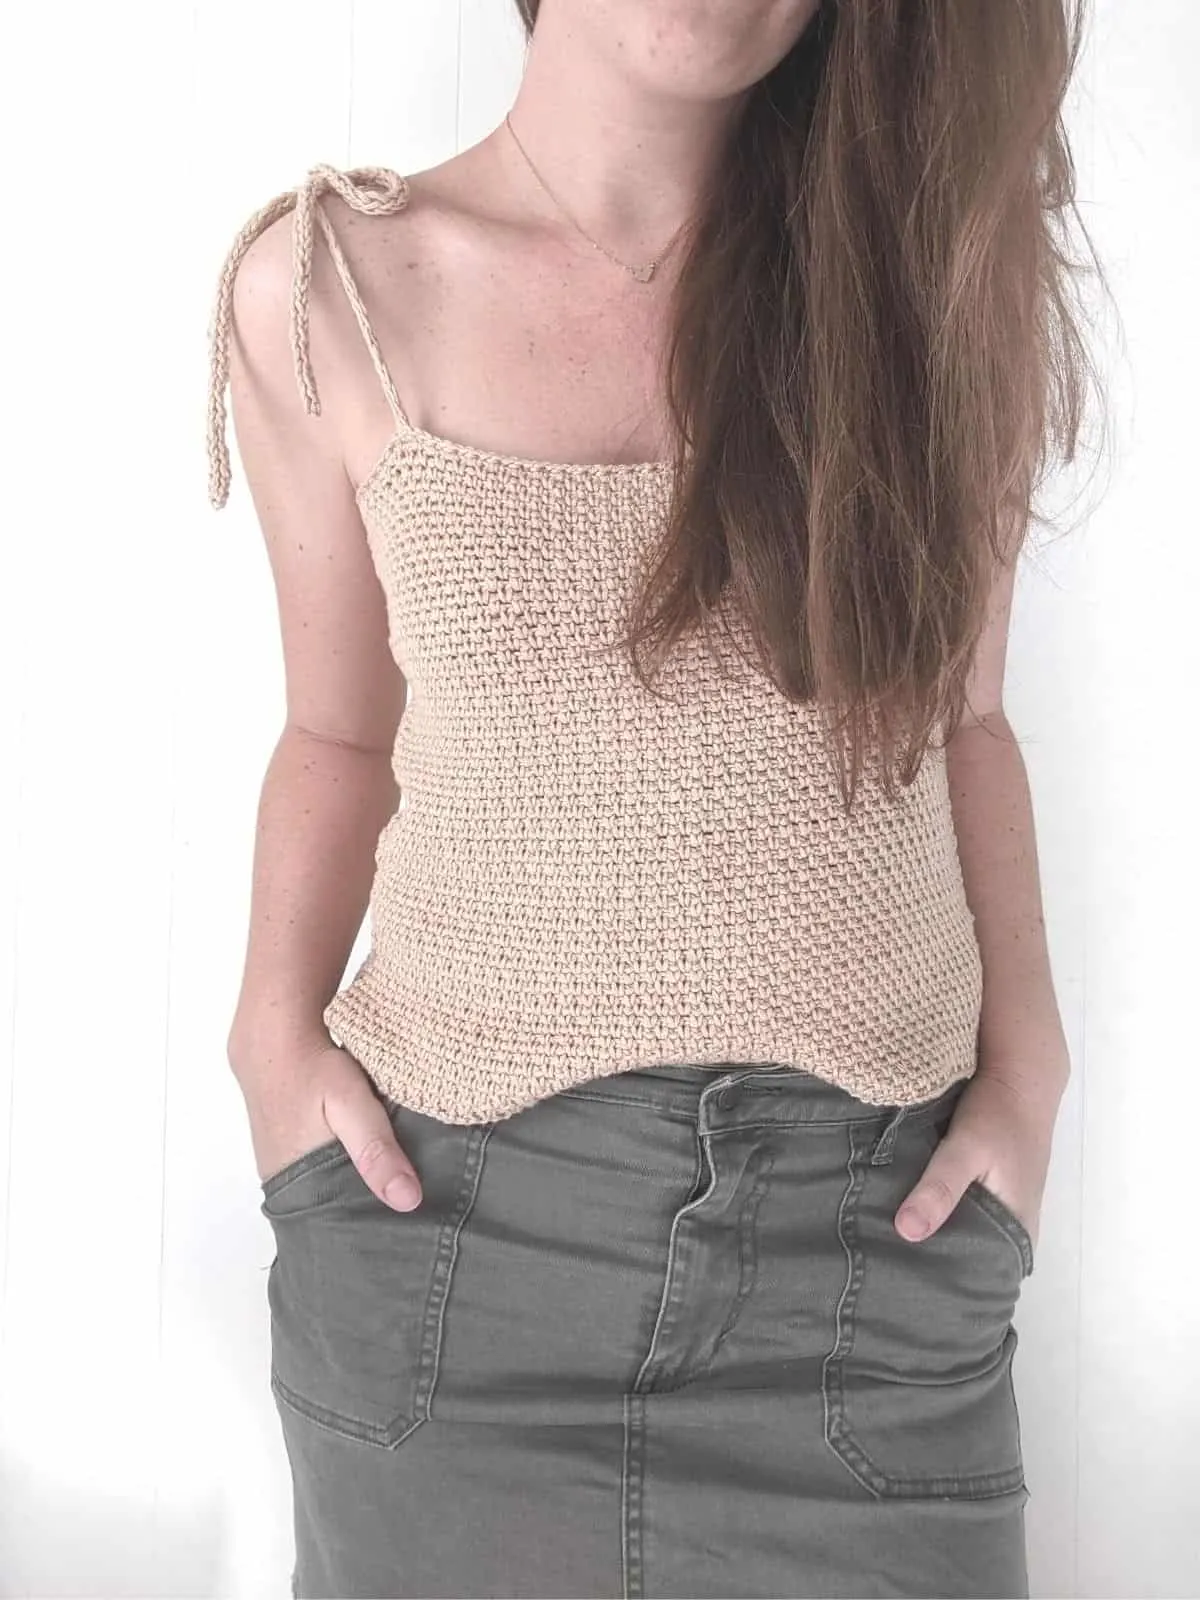 model wearing a sleeveless crochet top with a skirt.